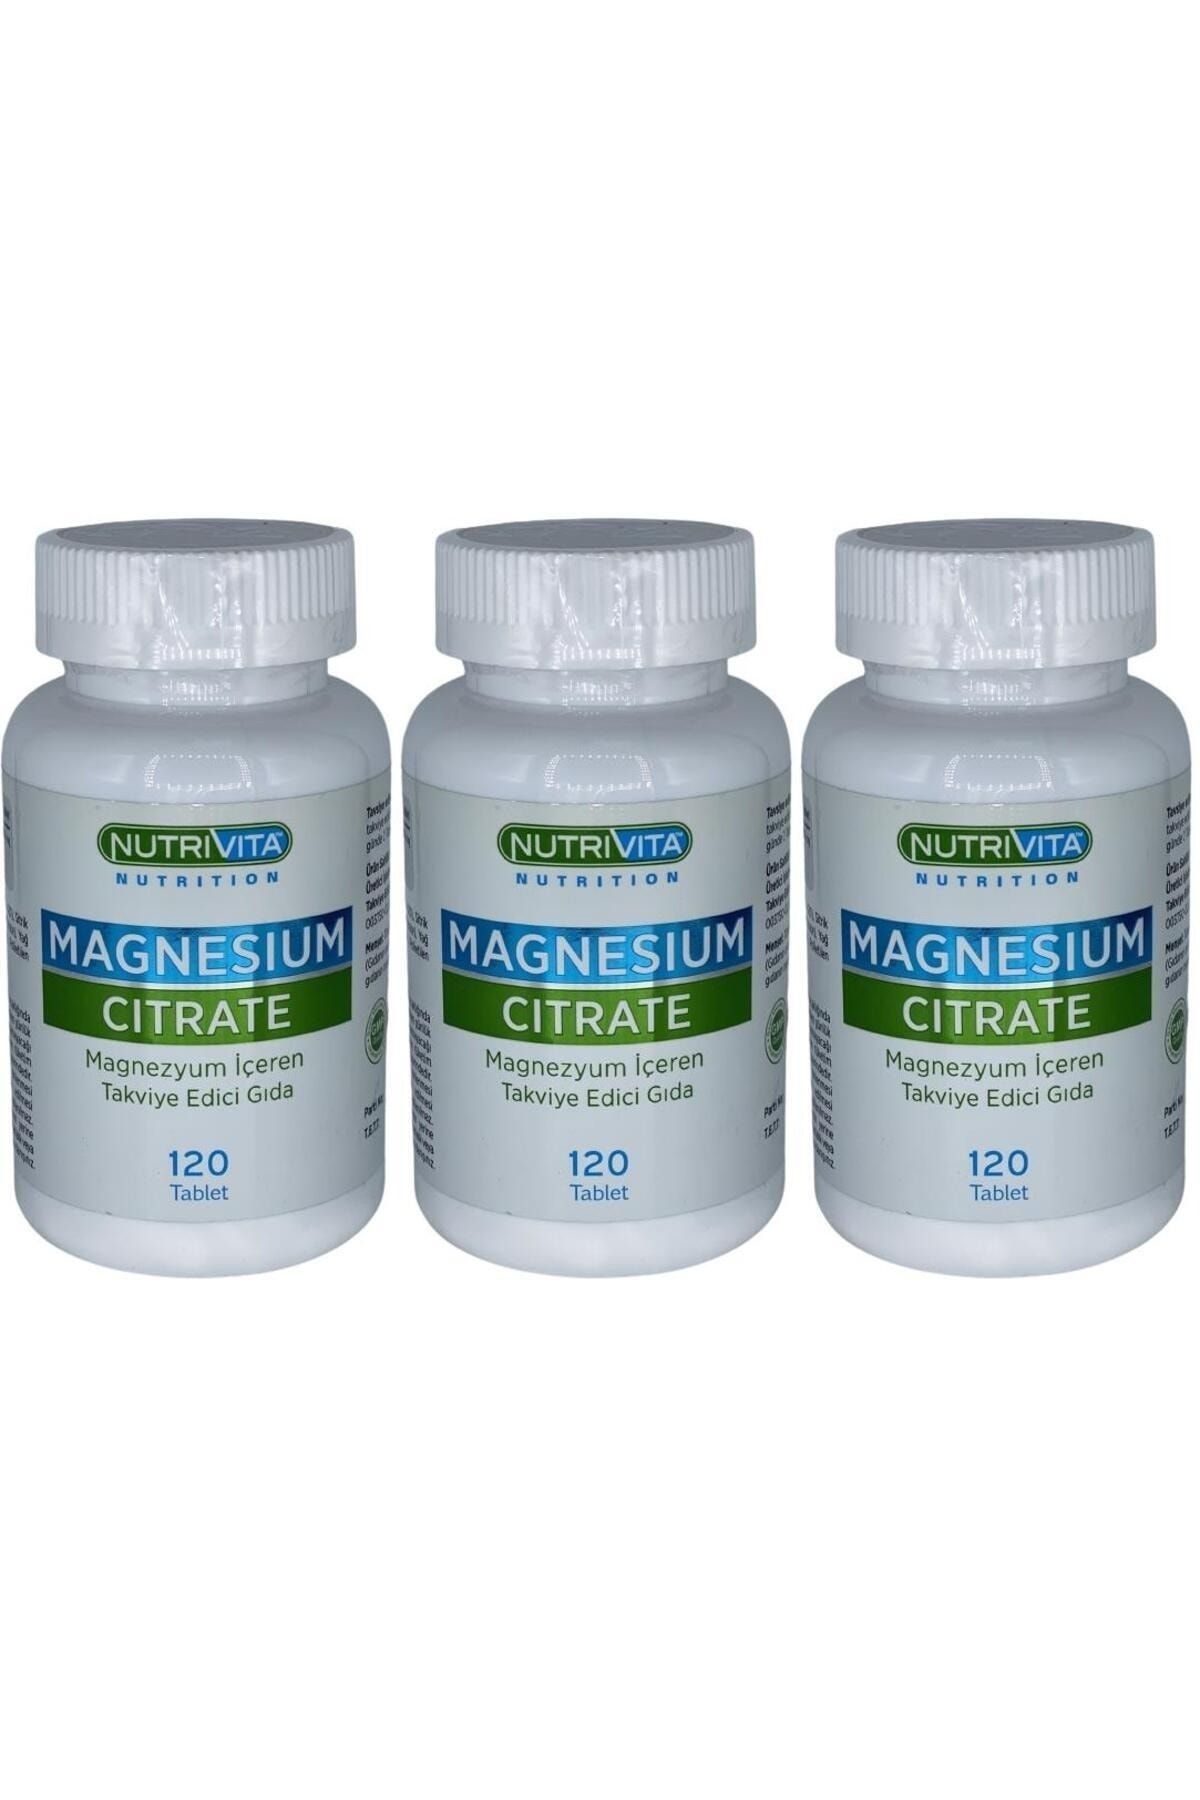 Nutrivita Nutrition Magnesium Citrate 3x120 Tablet Magnezyum Sitrat